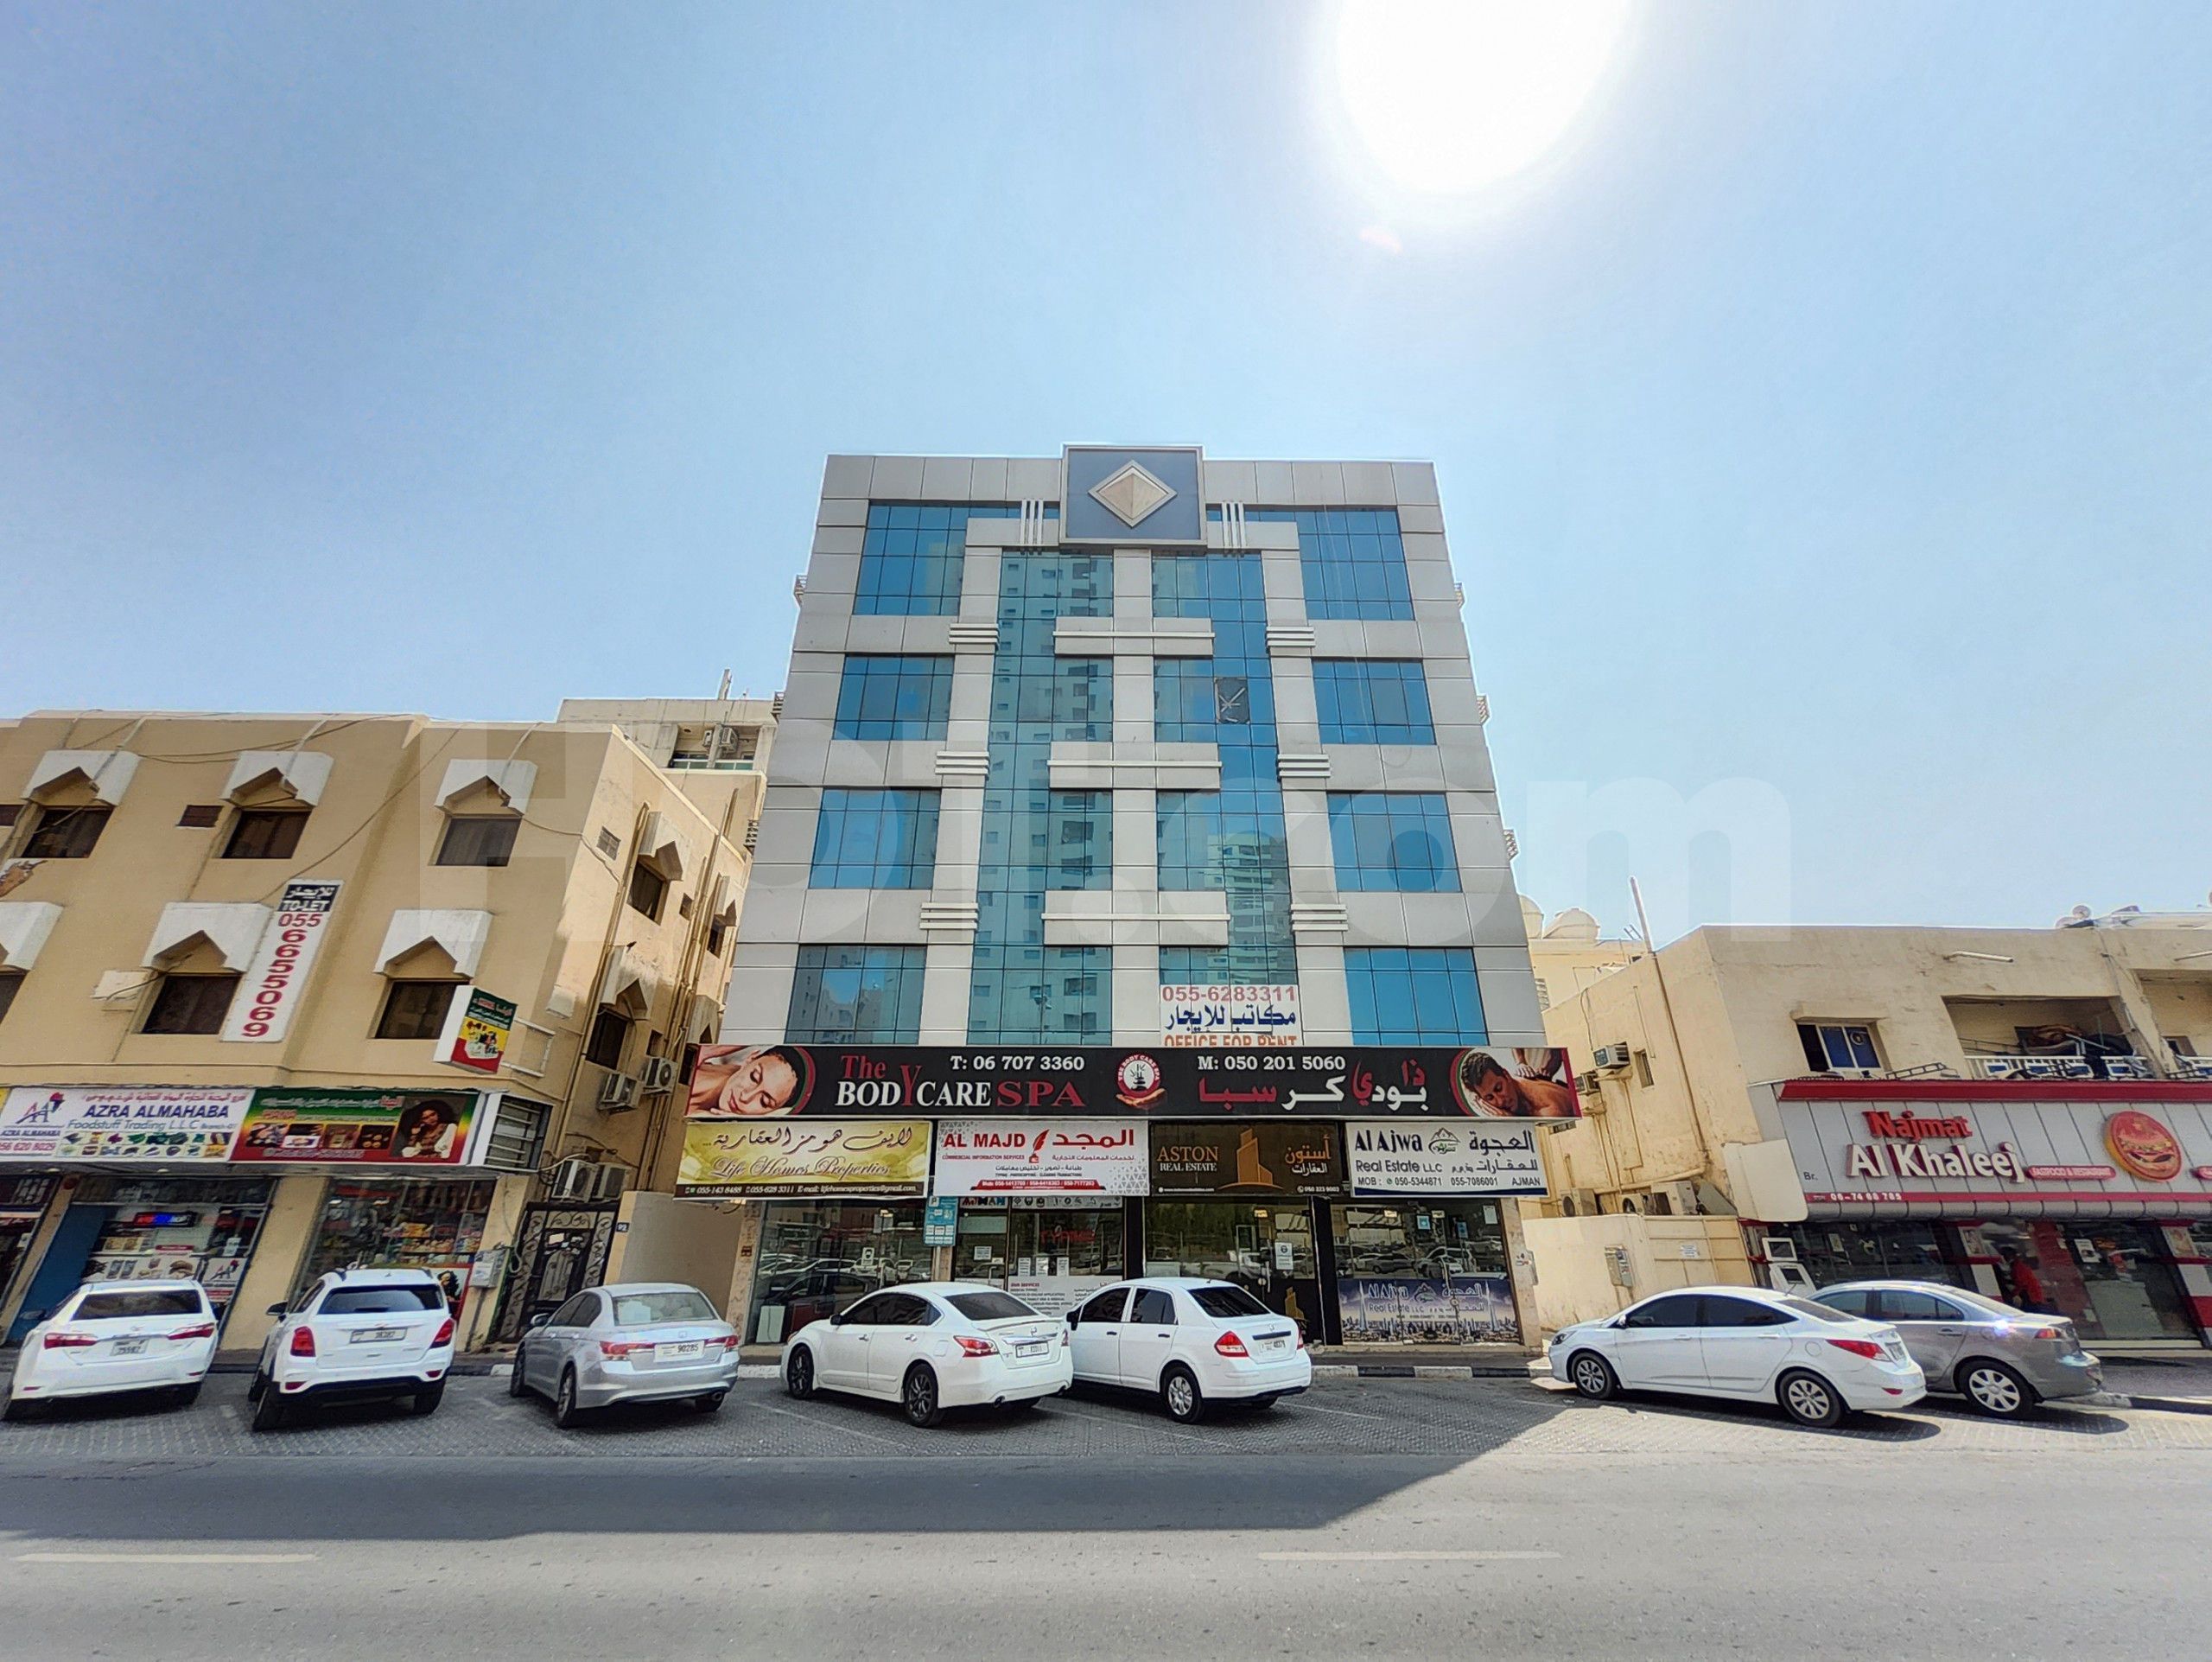 Ajman City, United Arab Emirates The Body Care Spa